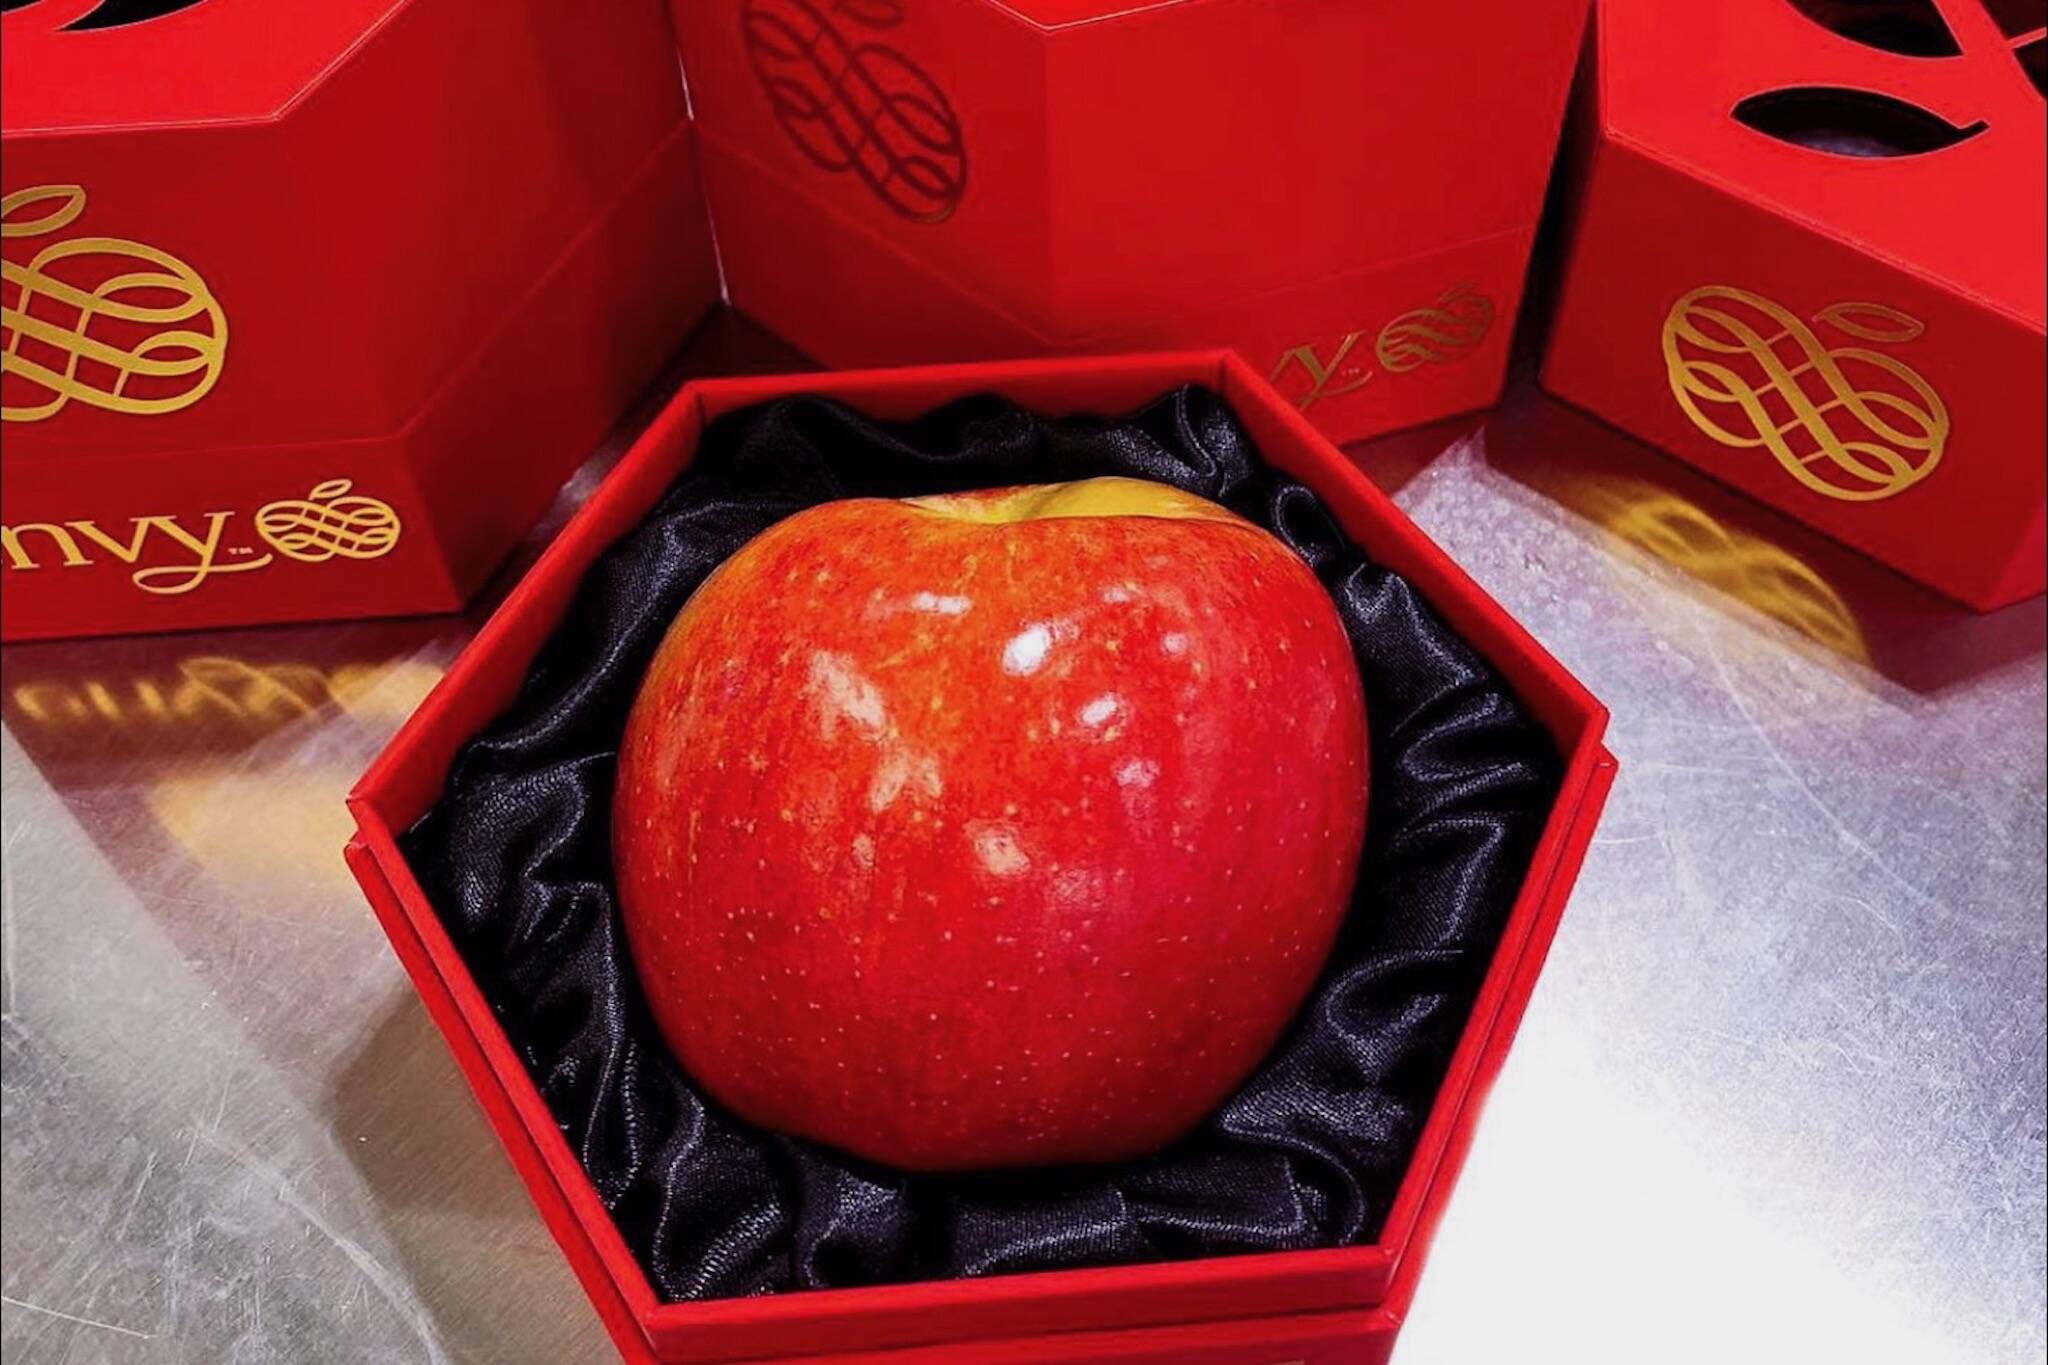 https://media.blogto.com/articles/20230109-envy-apples-tt-supermarket.jpeg?w=2048&cmd=resize_then_crop&height=1365&quality=70